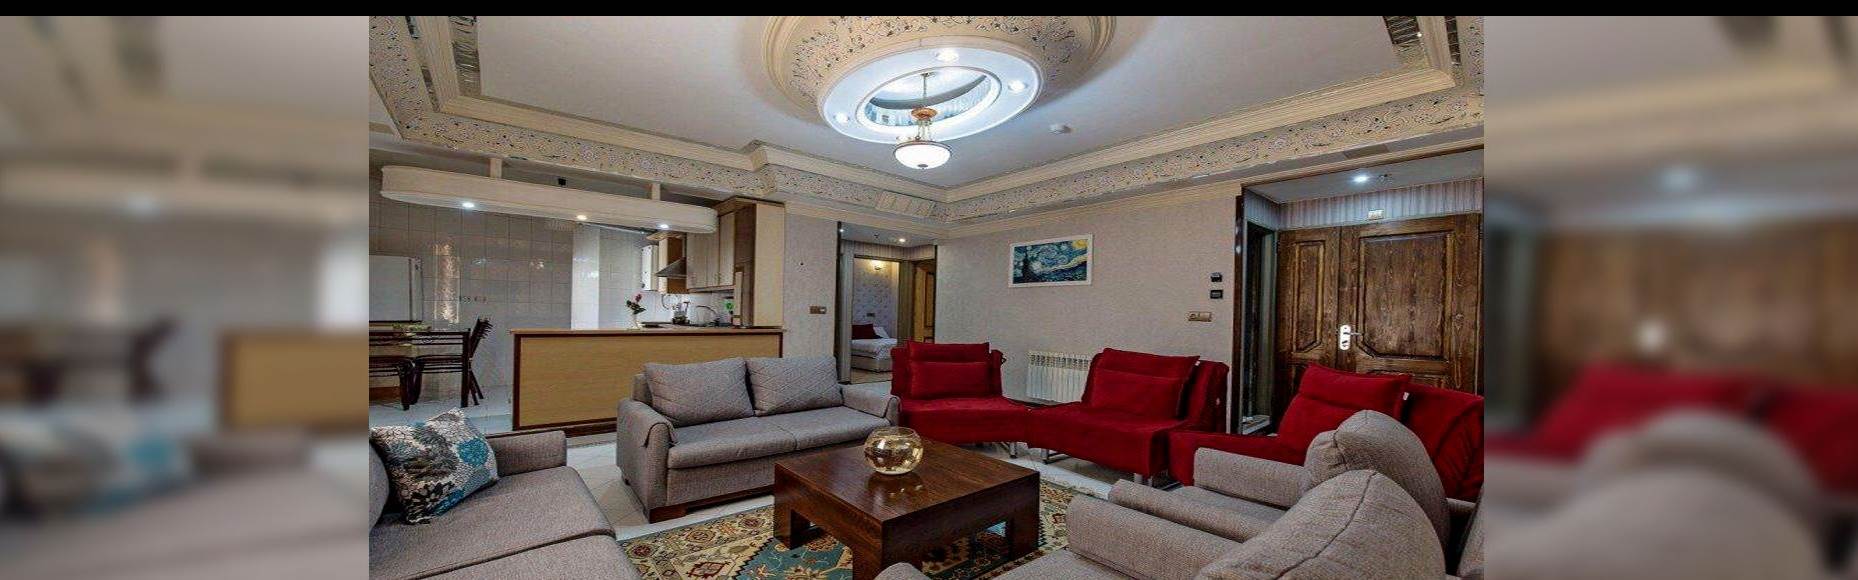 هتل آپارتمان خاتون اصفهان